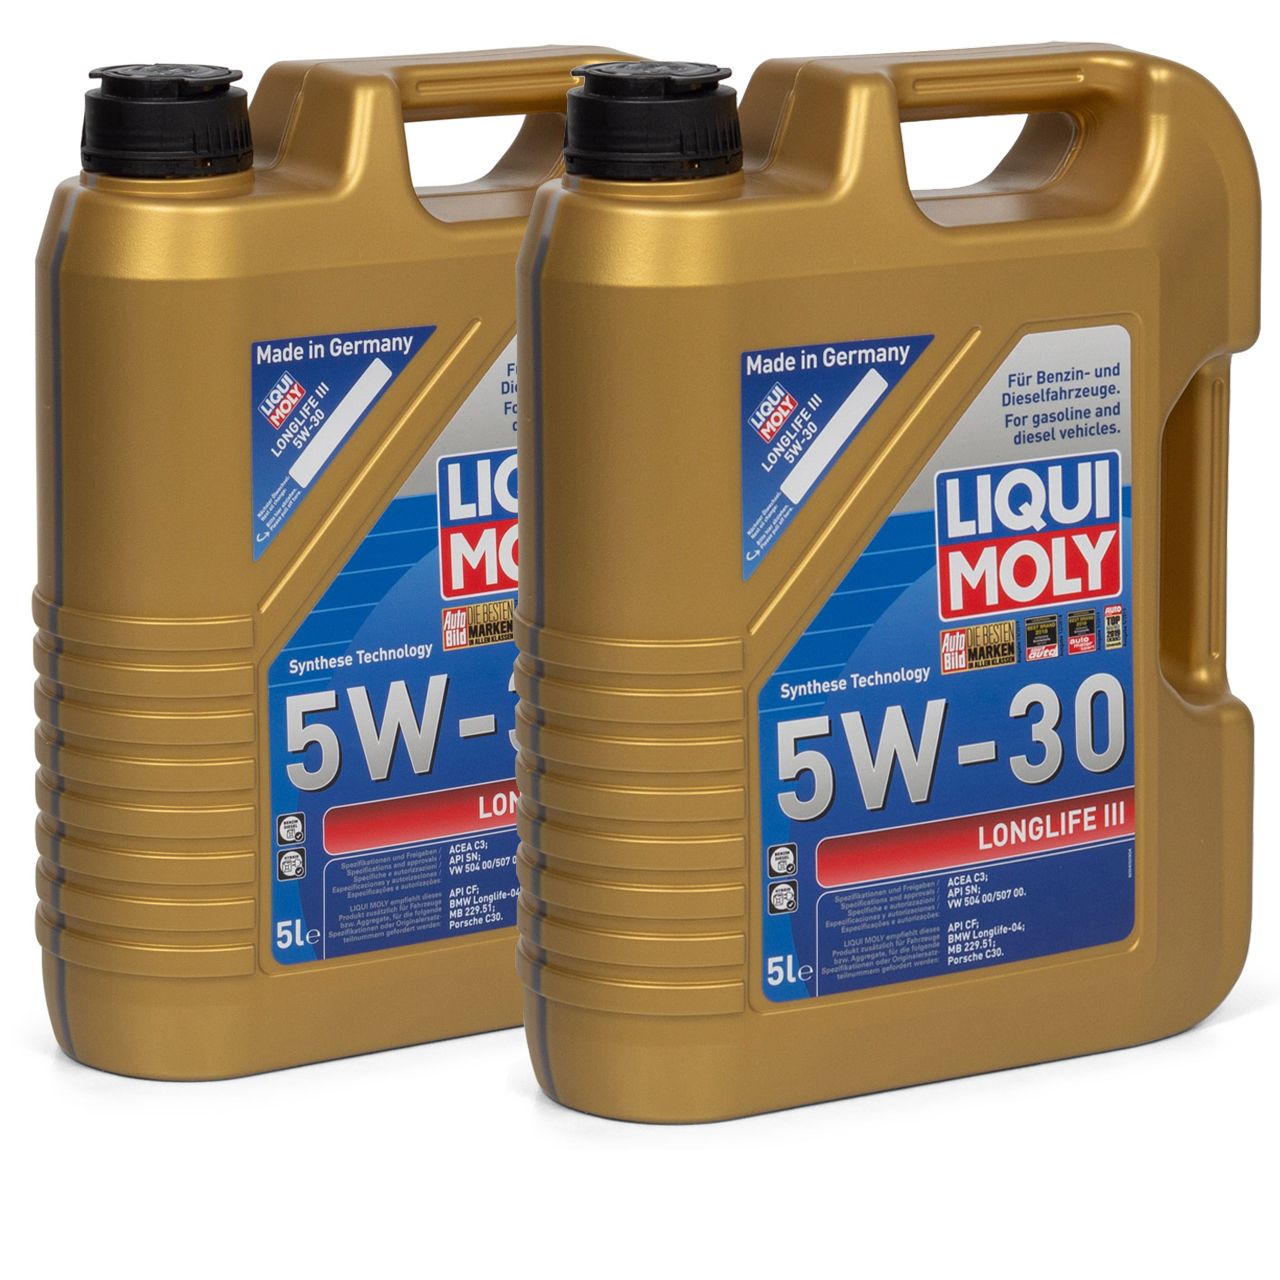 LIQUI MOLY Öl, 5 l, Kanister, Nr.1 Motorenöl 5W-30 